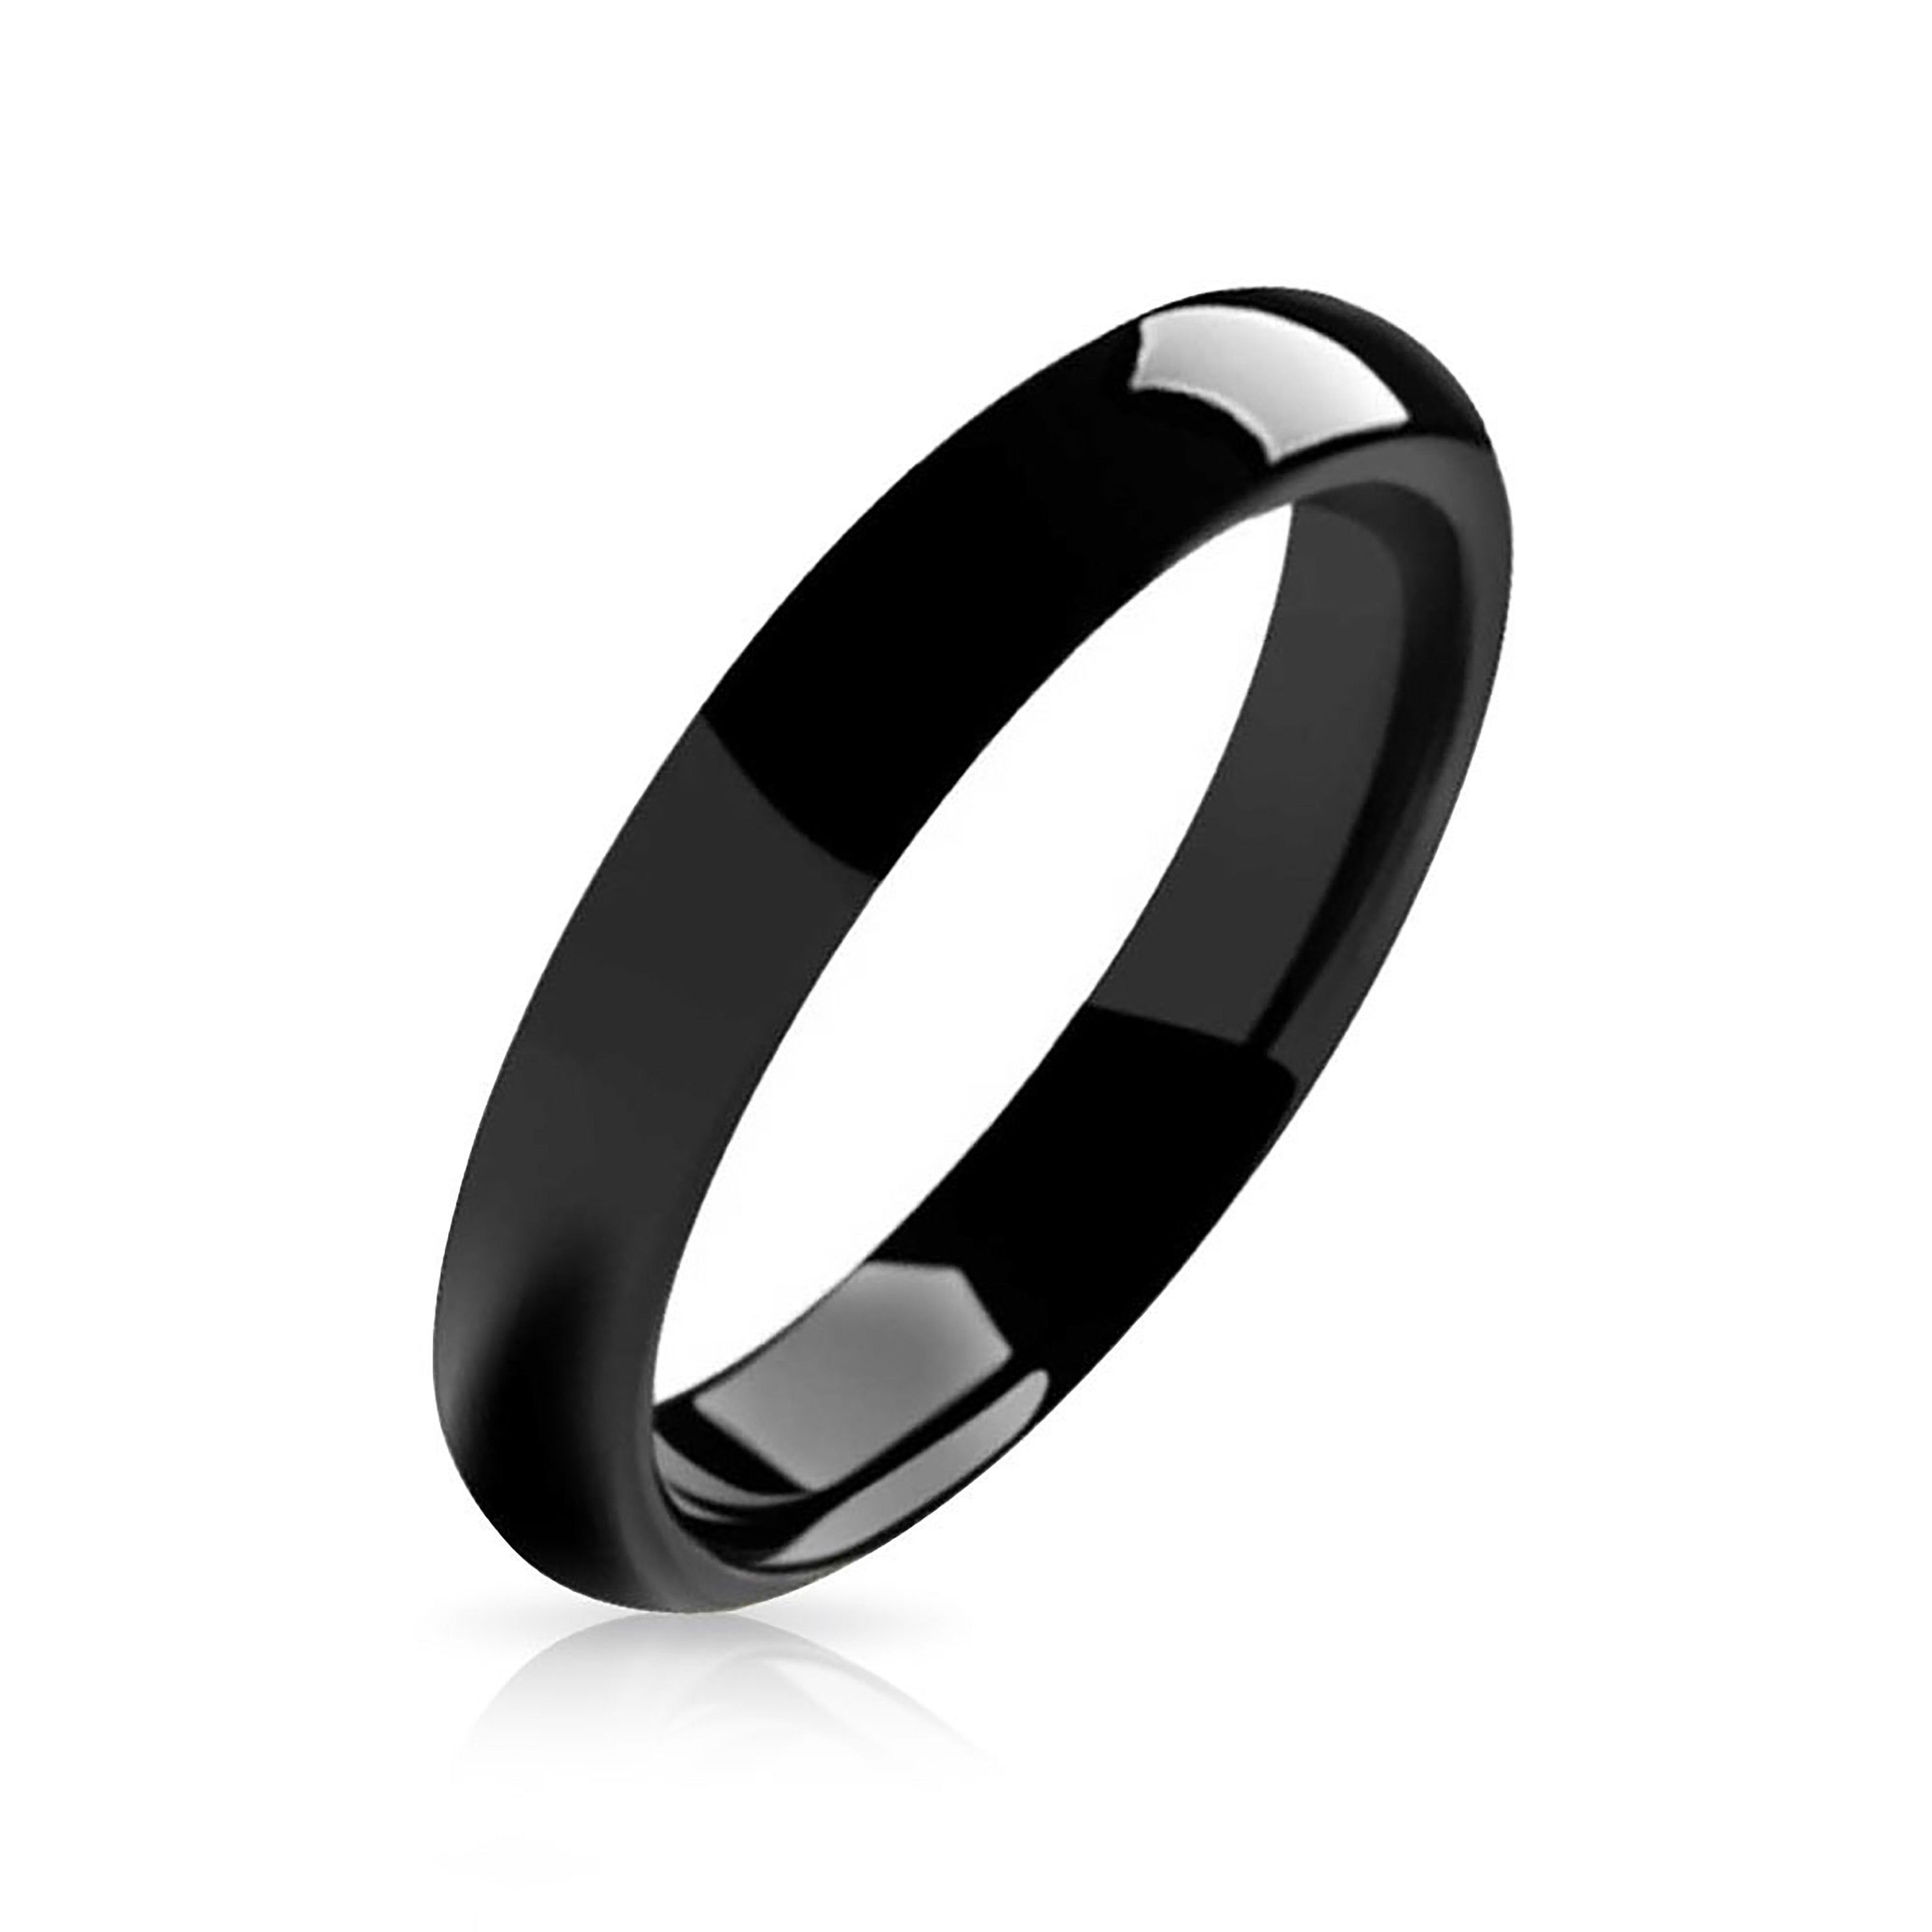 Черное кольцо фото. Кольцо Тунгстен карбид. Карбид вольфрама кольцо. Кольцо карбид вольфрама черное. Кольцо из карбида вольфрама.